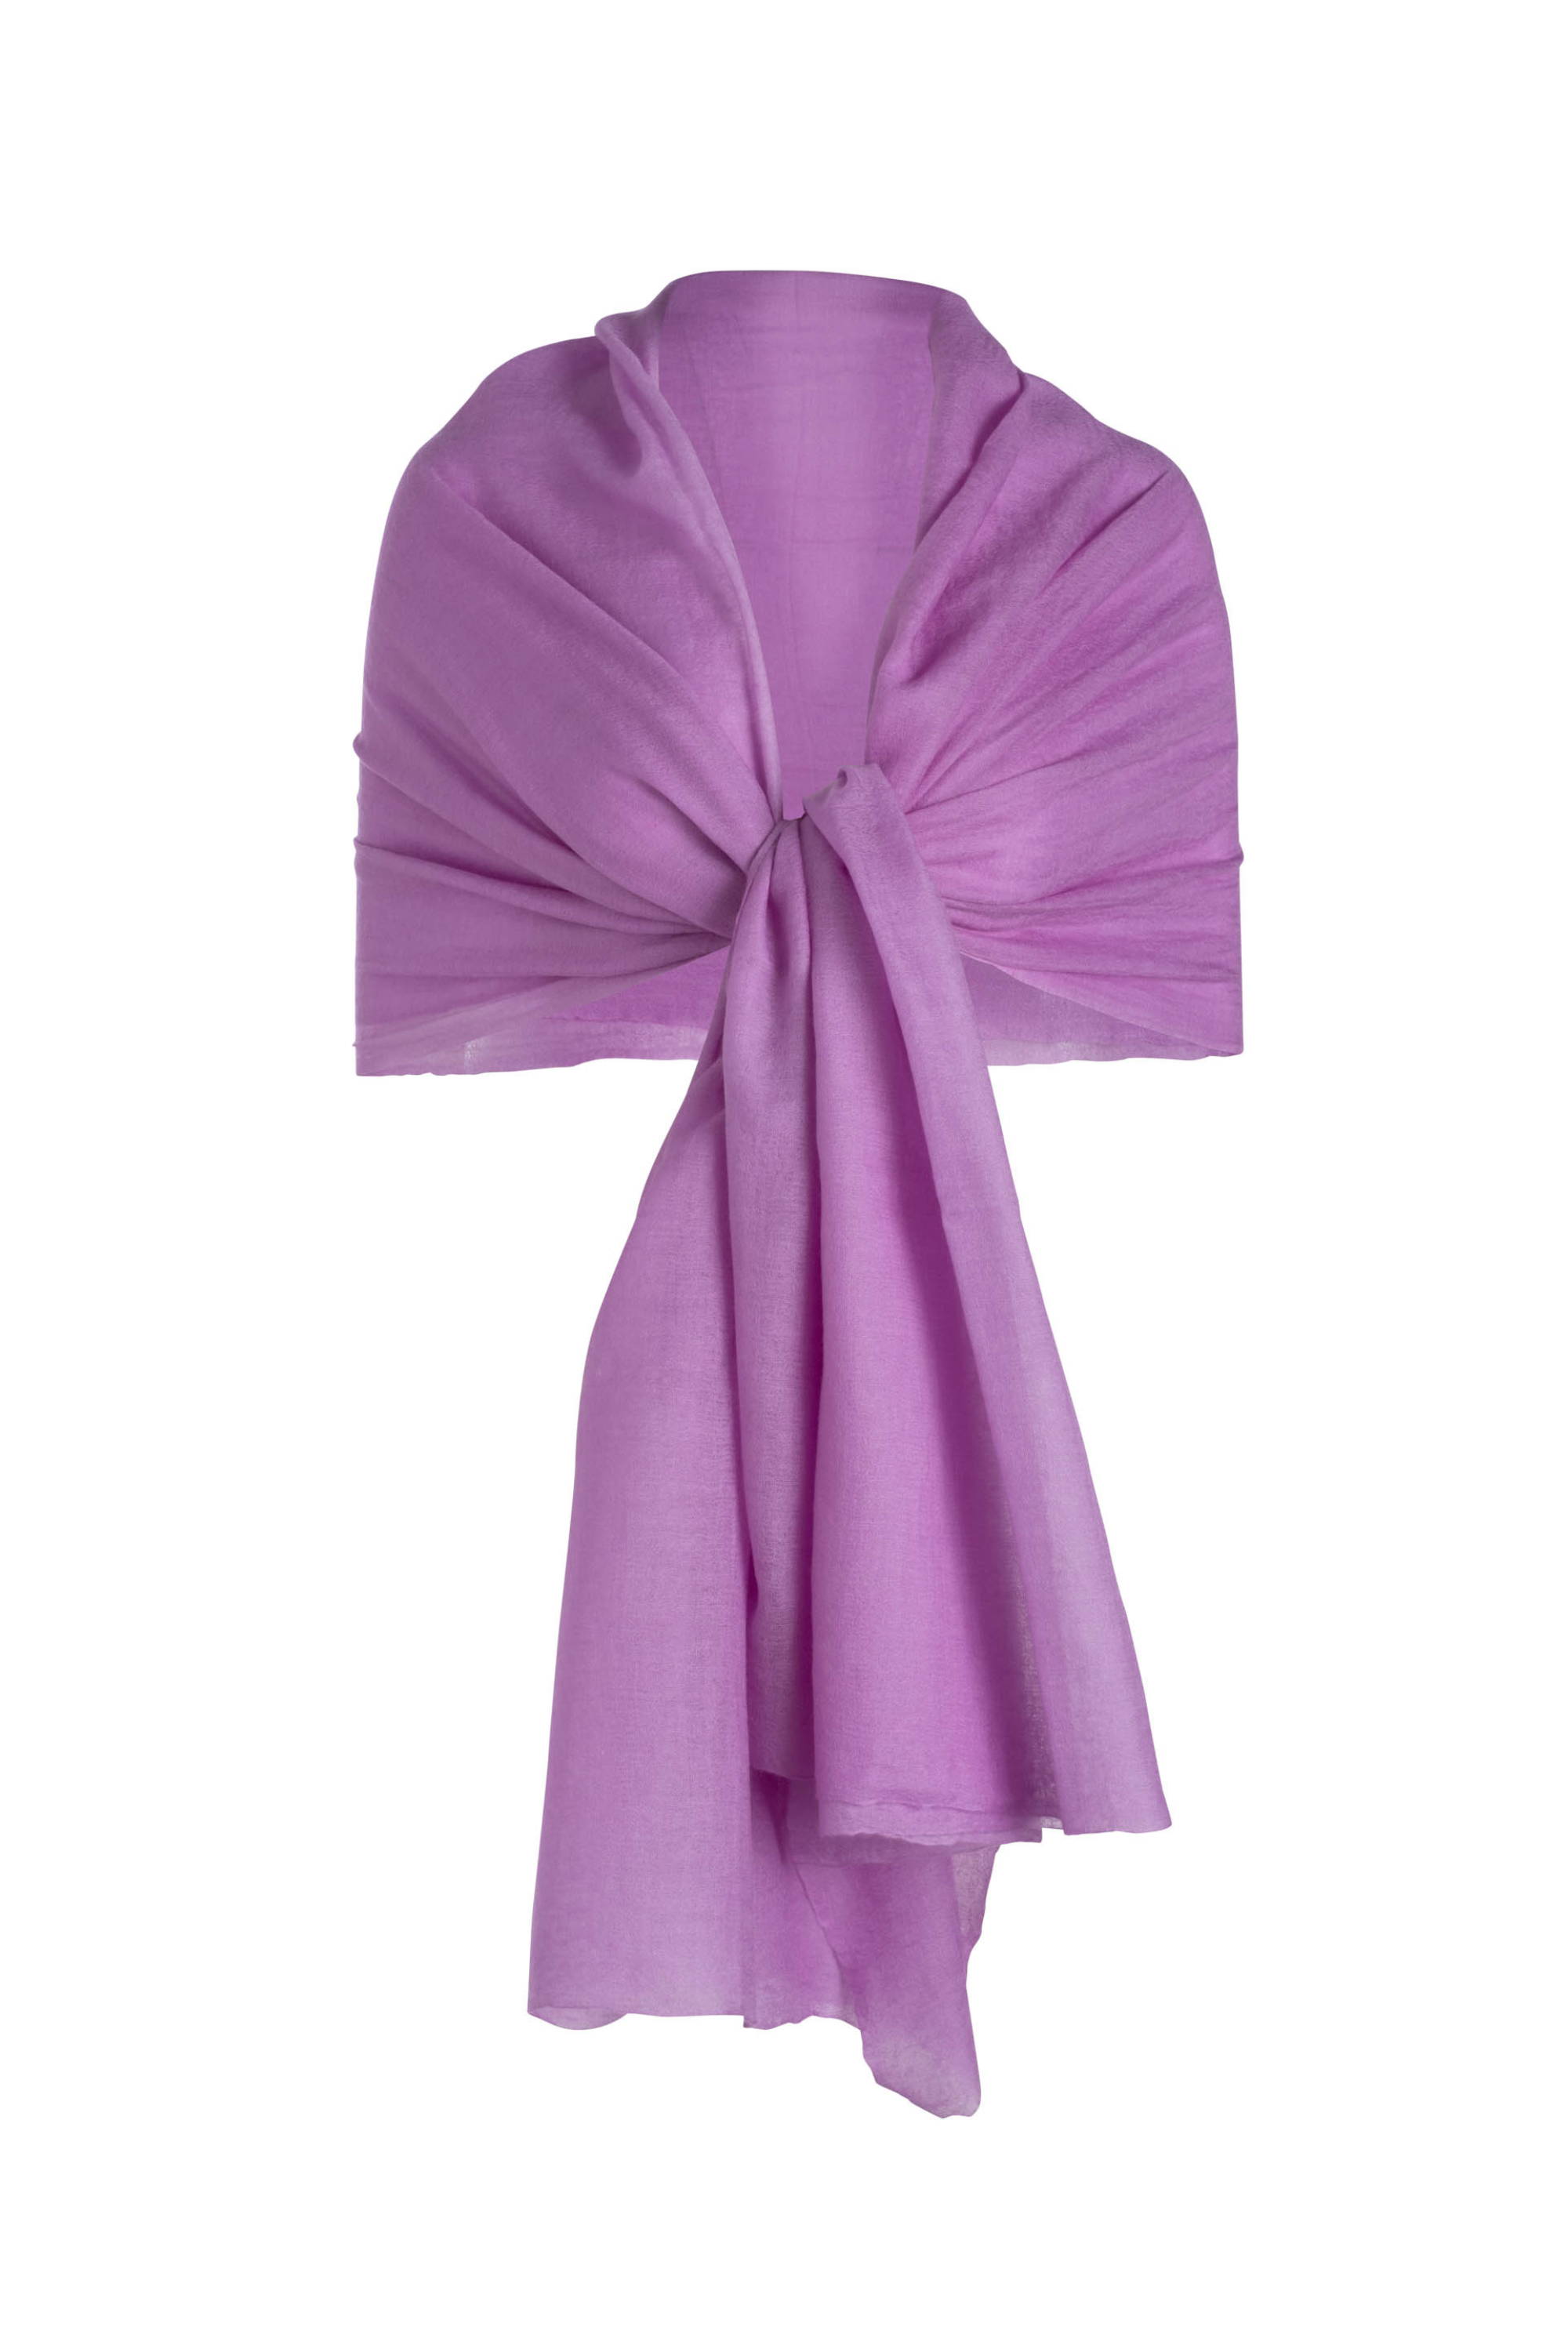 purple cashmere shawl by Ala von Auersperg for bridesmaids gifts